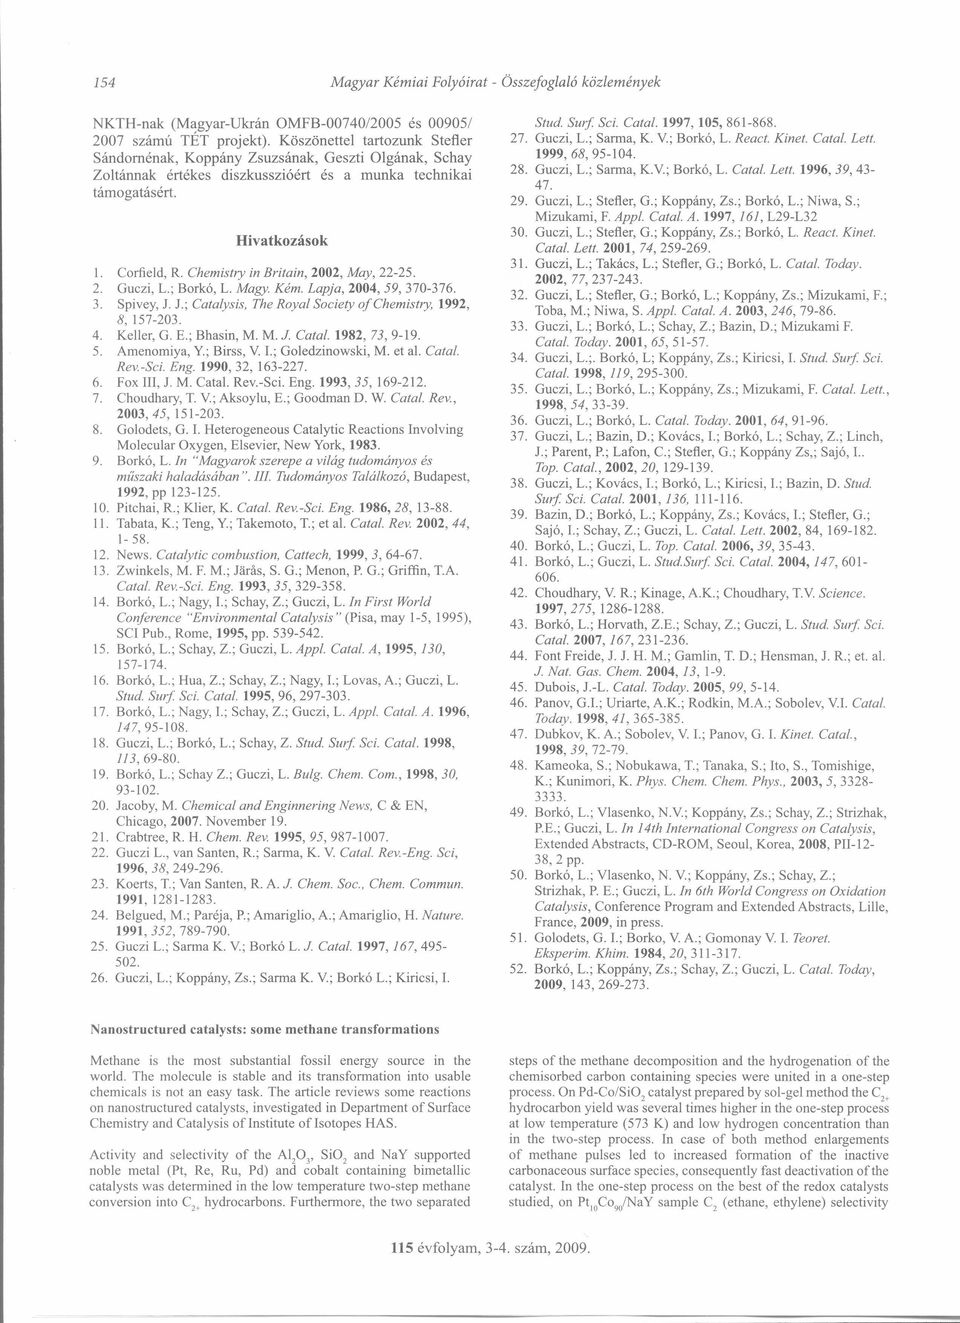 Chemisfry in Brifain, 2002, May, 22-25. 2. Guczi, L.; Borkó, L. Magy. Kém. Lapja, 2004, 59, 370-376. 3. Spivey, J. J.; Catalysis, The Roya! Society of Chemistry, 1992, 8, 157-203. 4. Keller, G. E.